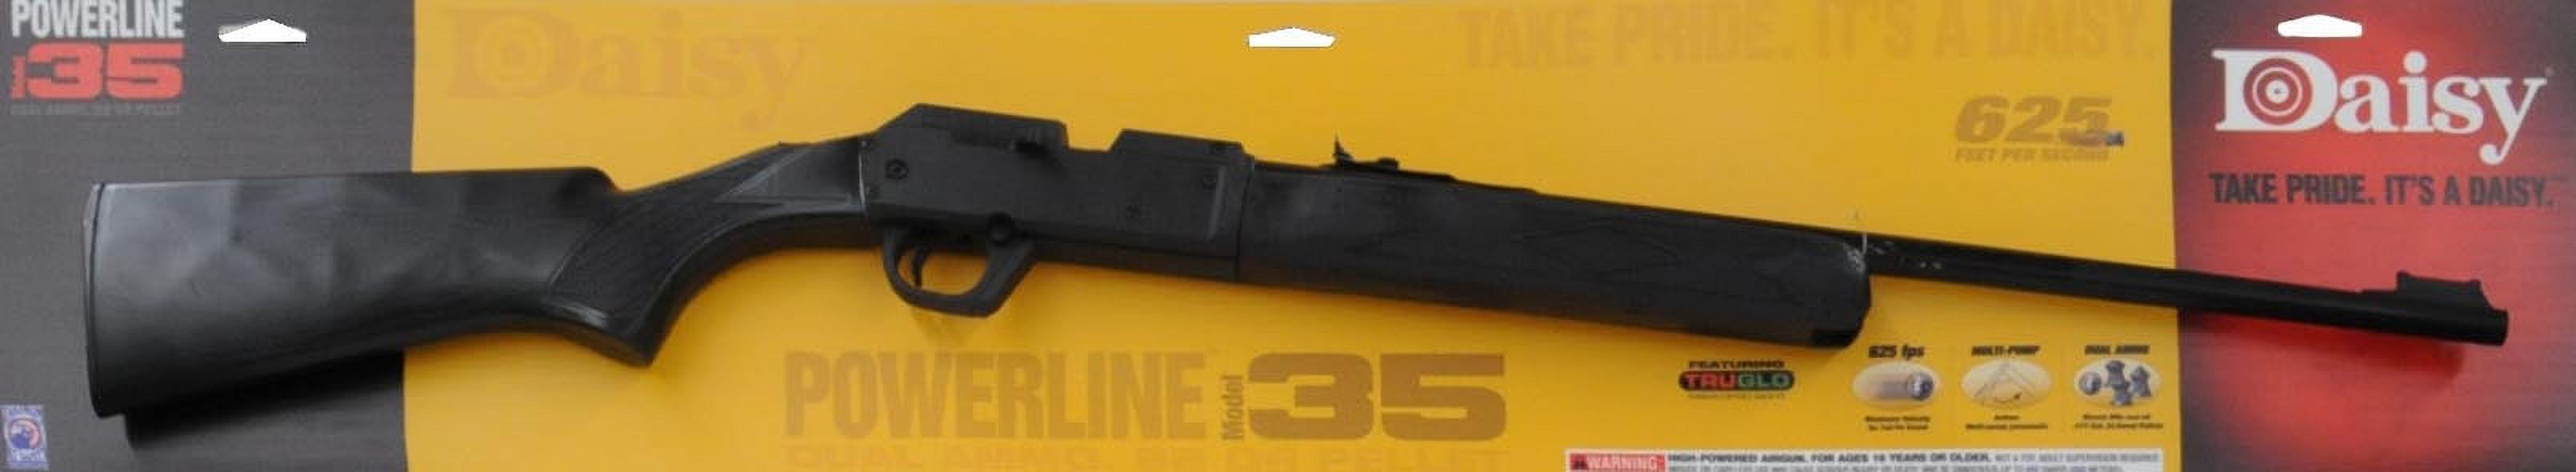 Daisy Powerline Model 35 Multi-Pump .177 BB / Pellet Rifle 625 FPS Black - image 2 of 2